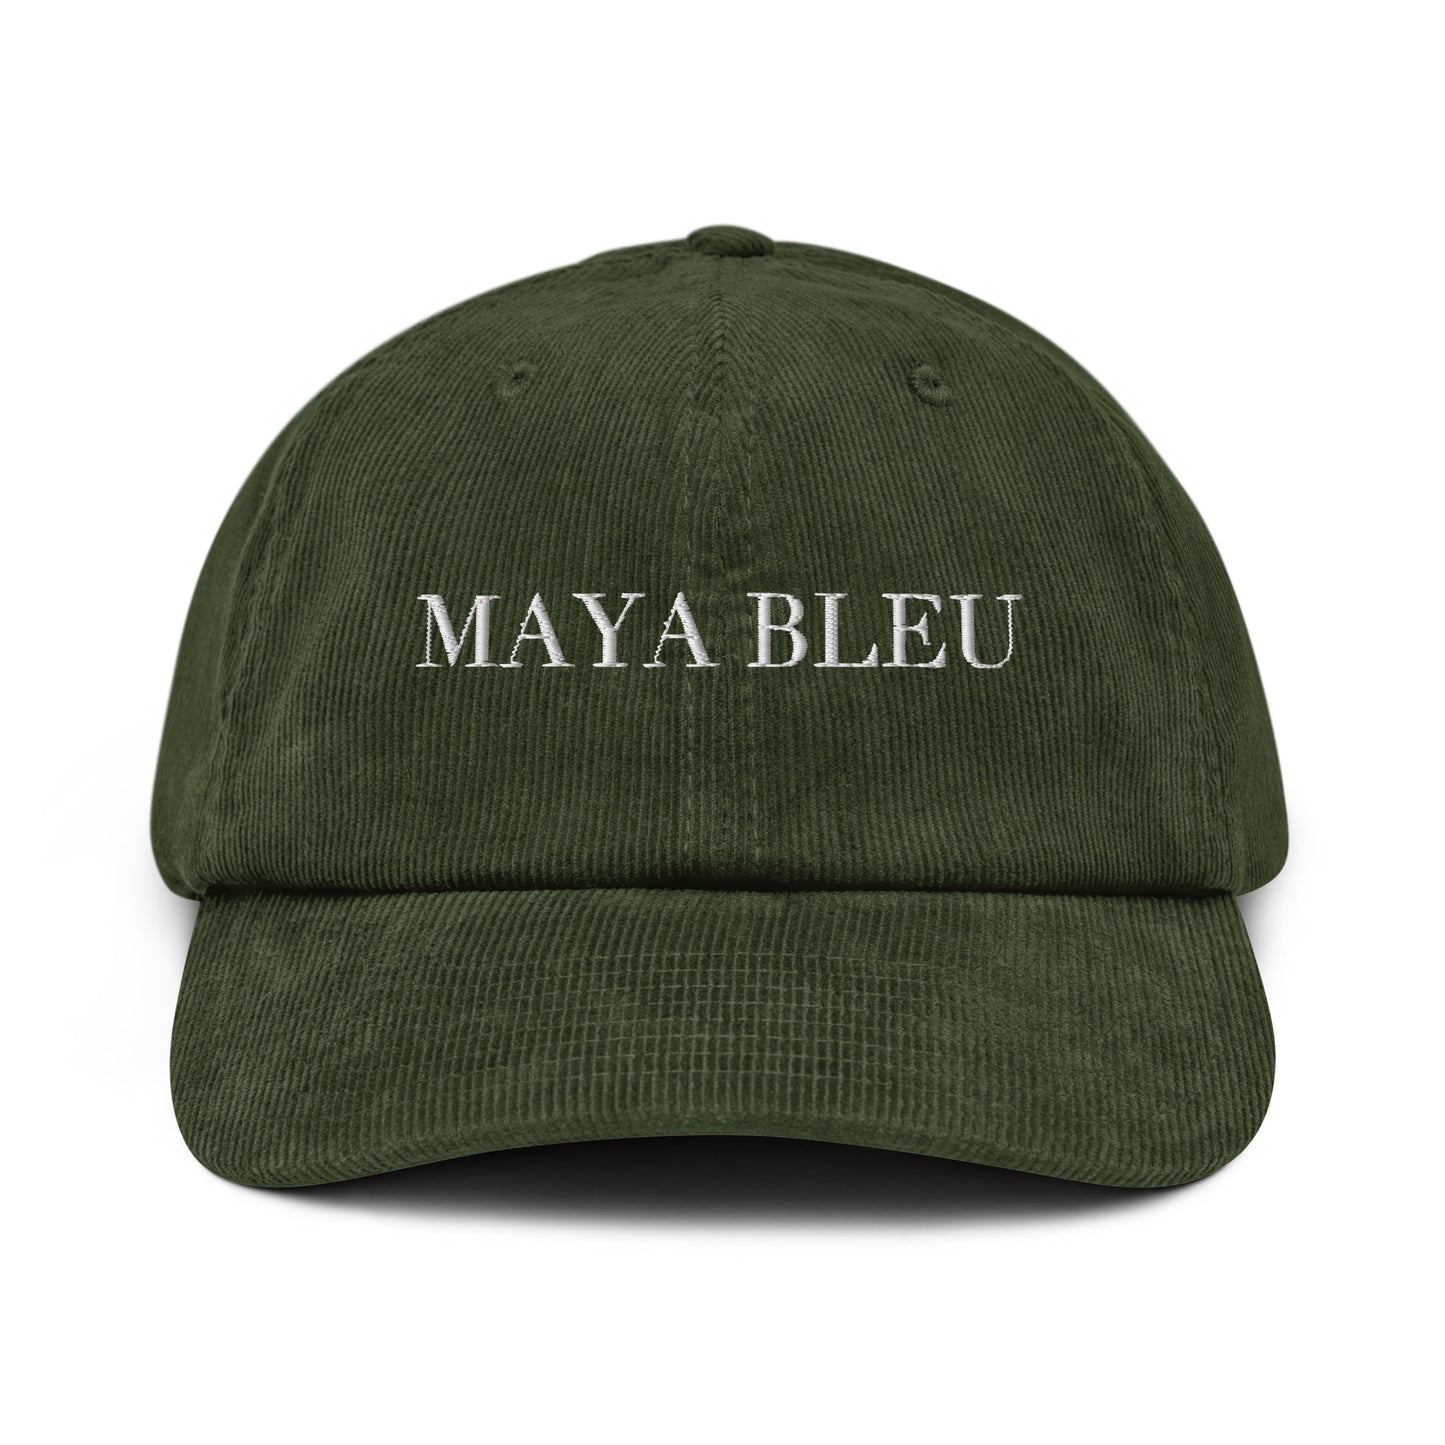 MAYA BLEU Corduroy hat